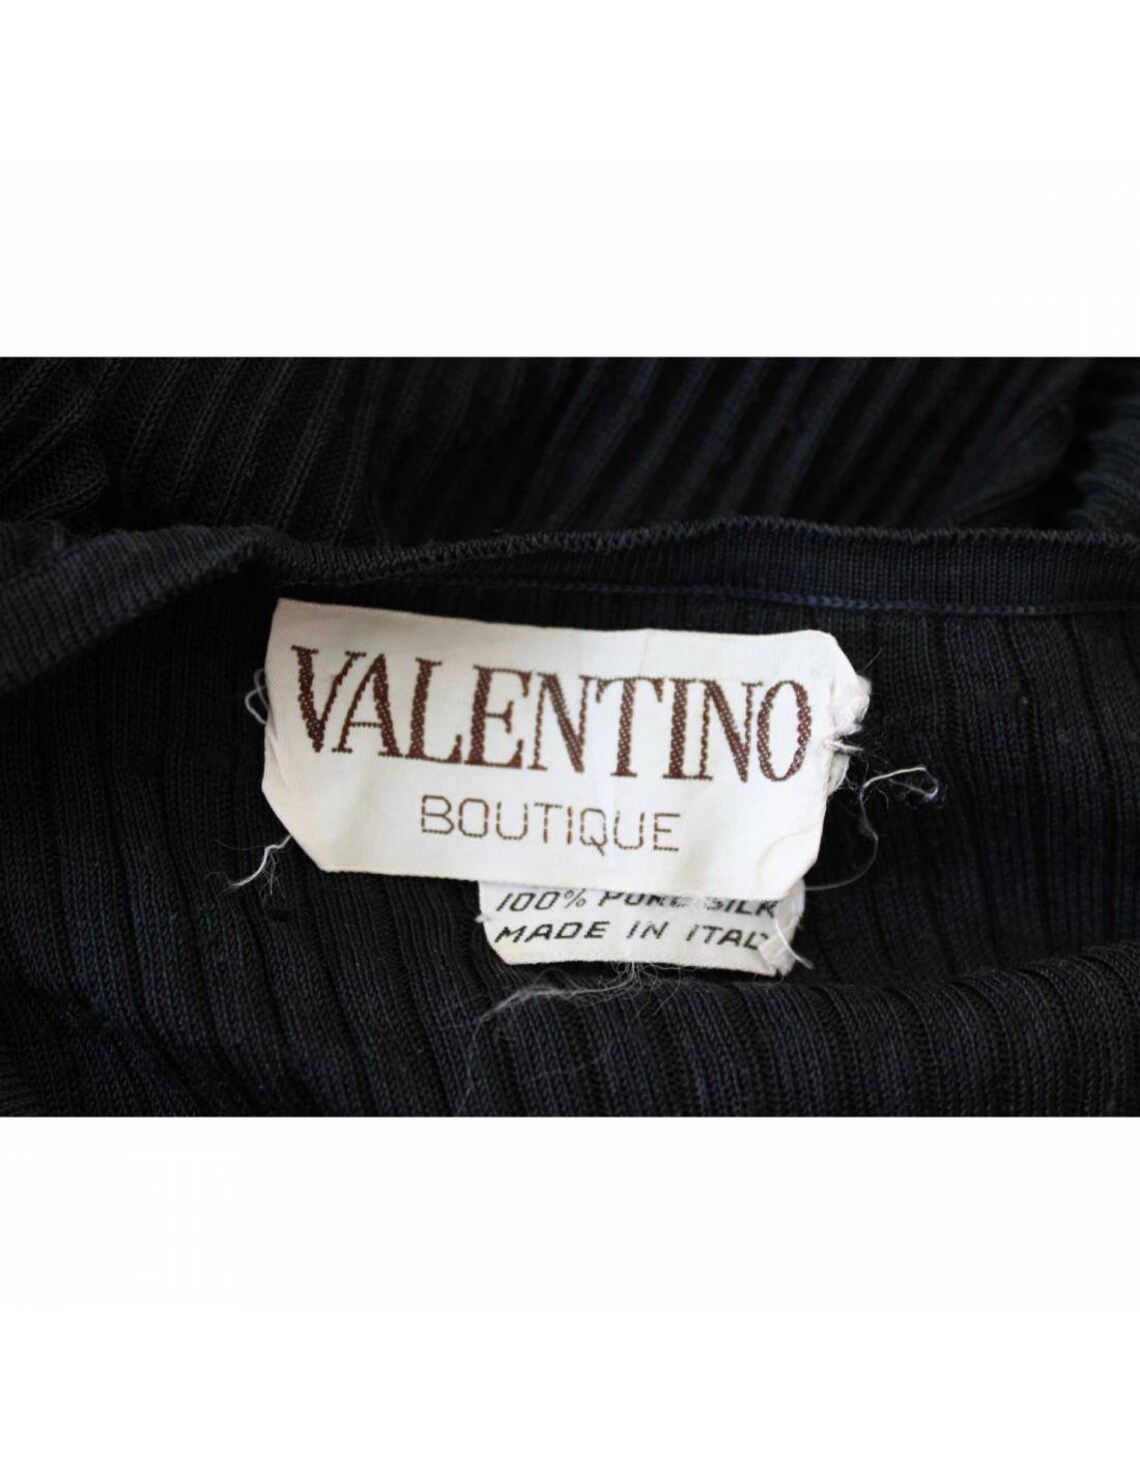 Valentino Boutique Shirt Silk Crew Neck Vintage Black | Etsy